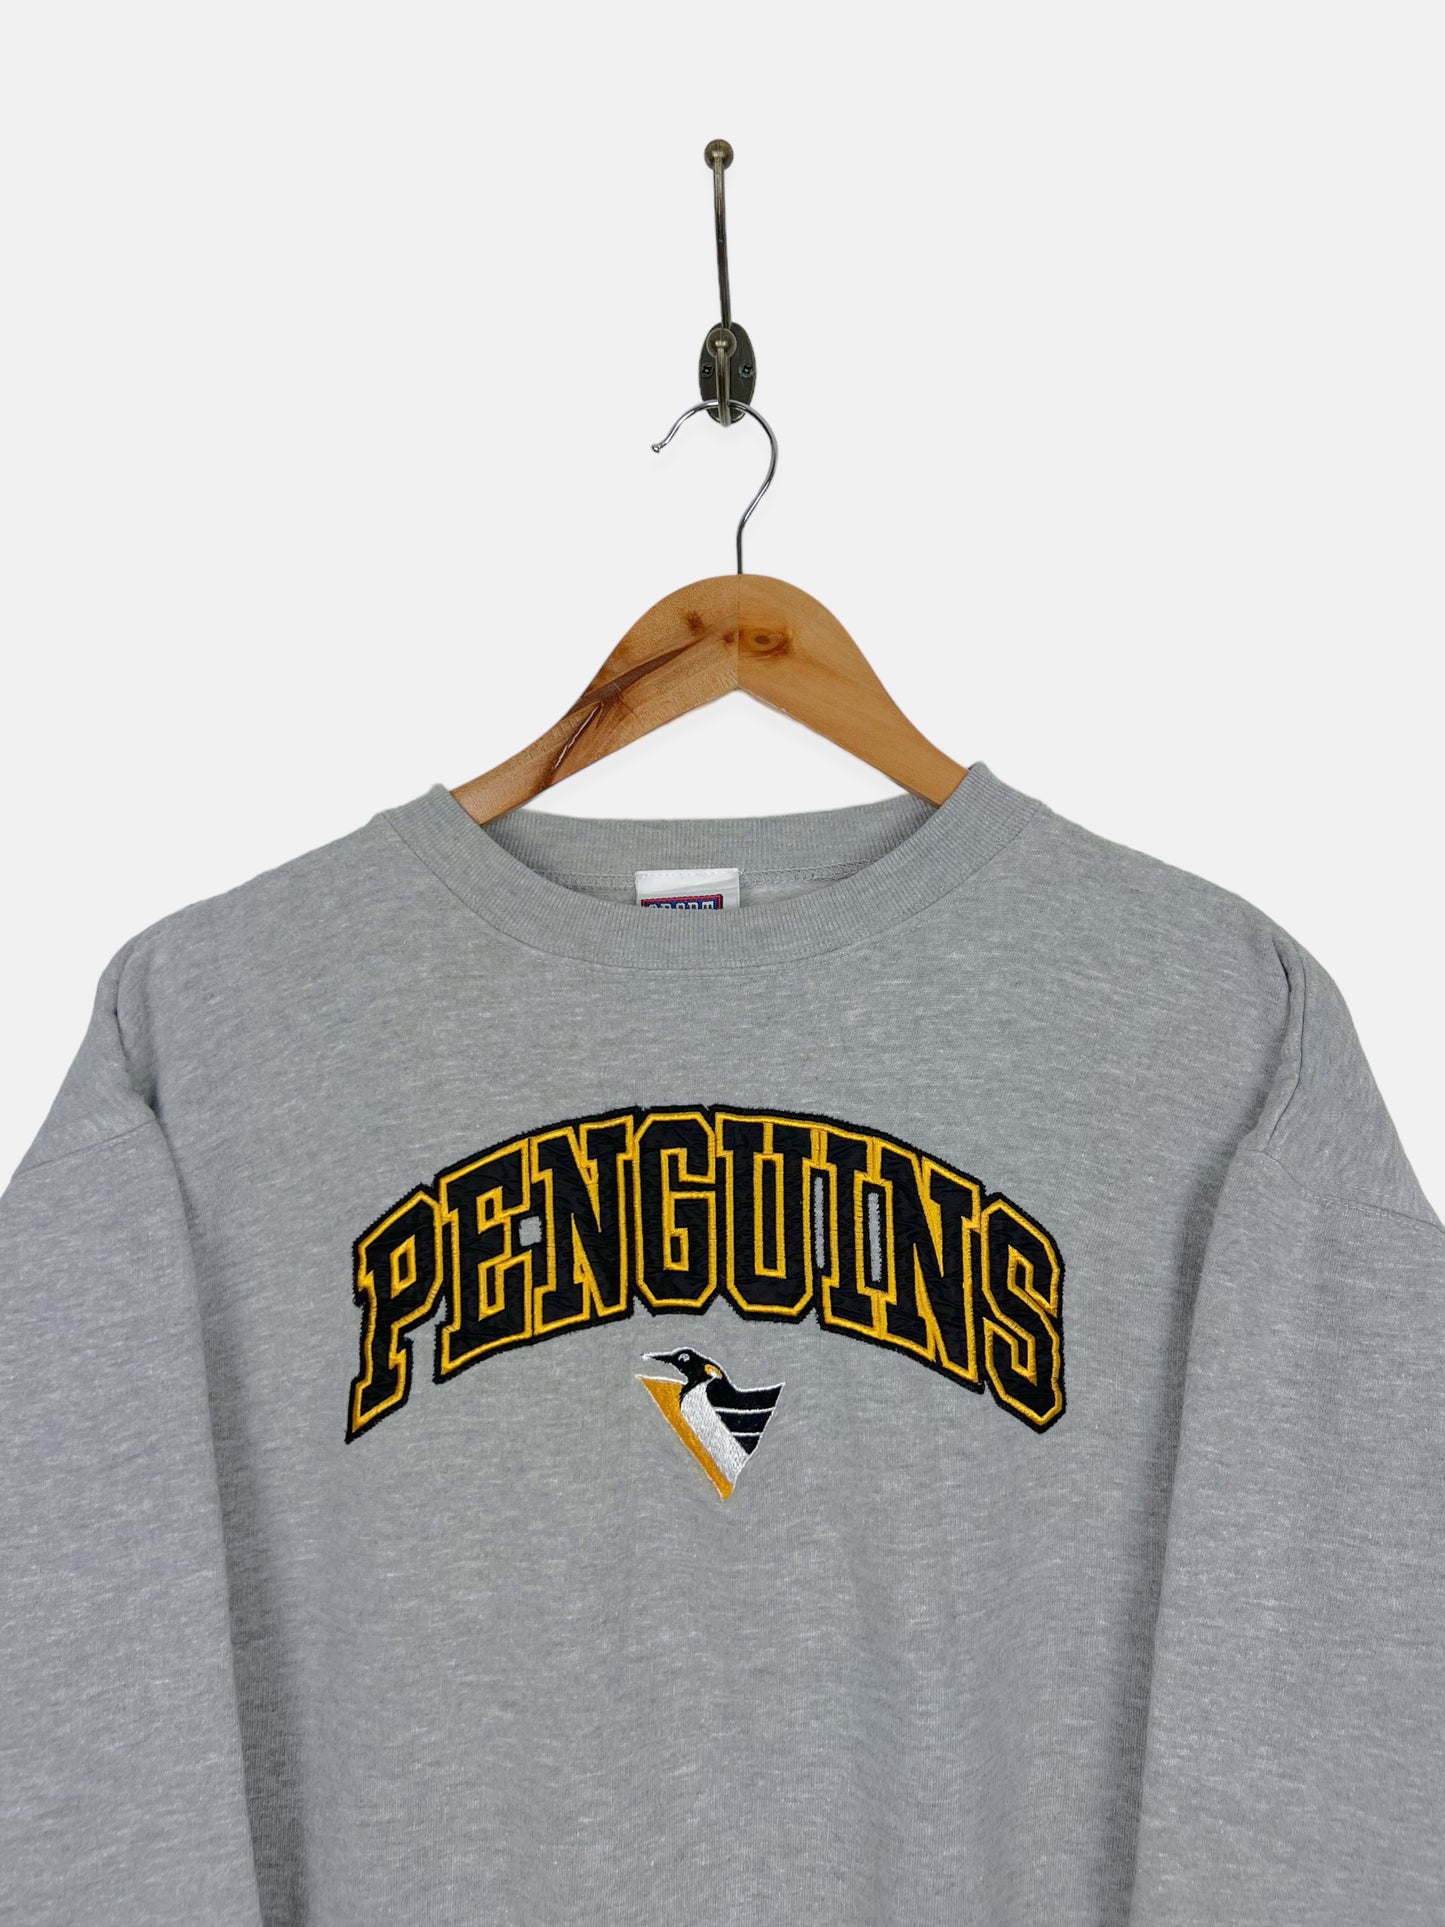 90's Pittsburgh Penguins NHL Embroidered Vintage Sweatshirt Size 6